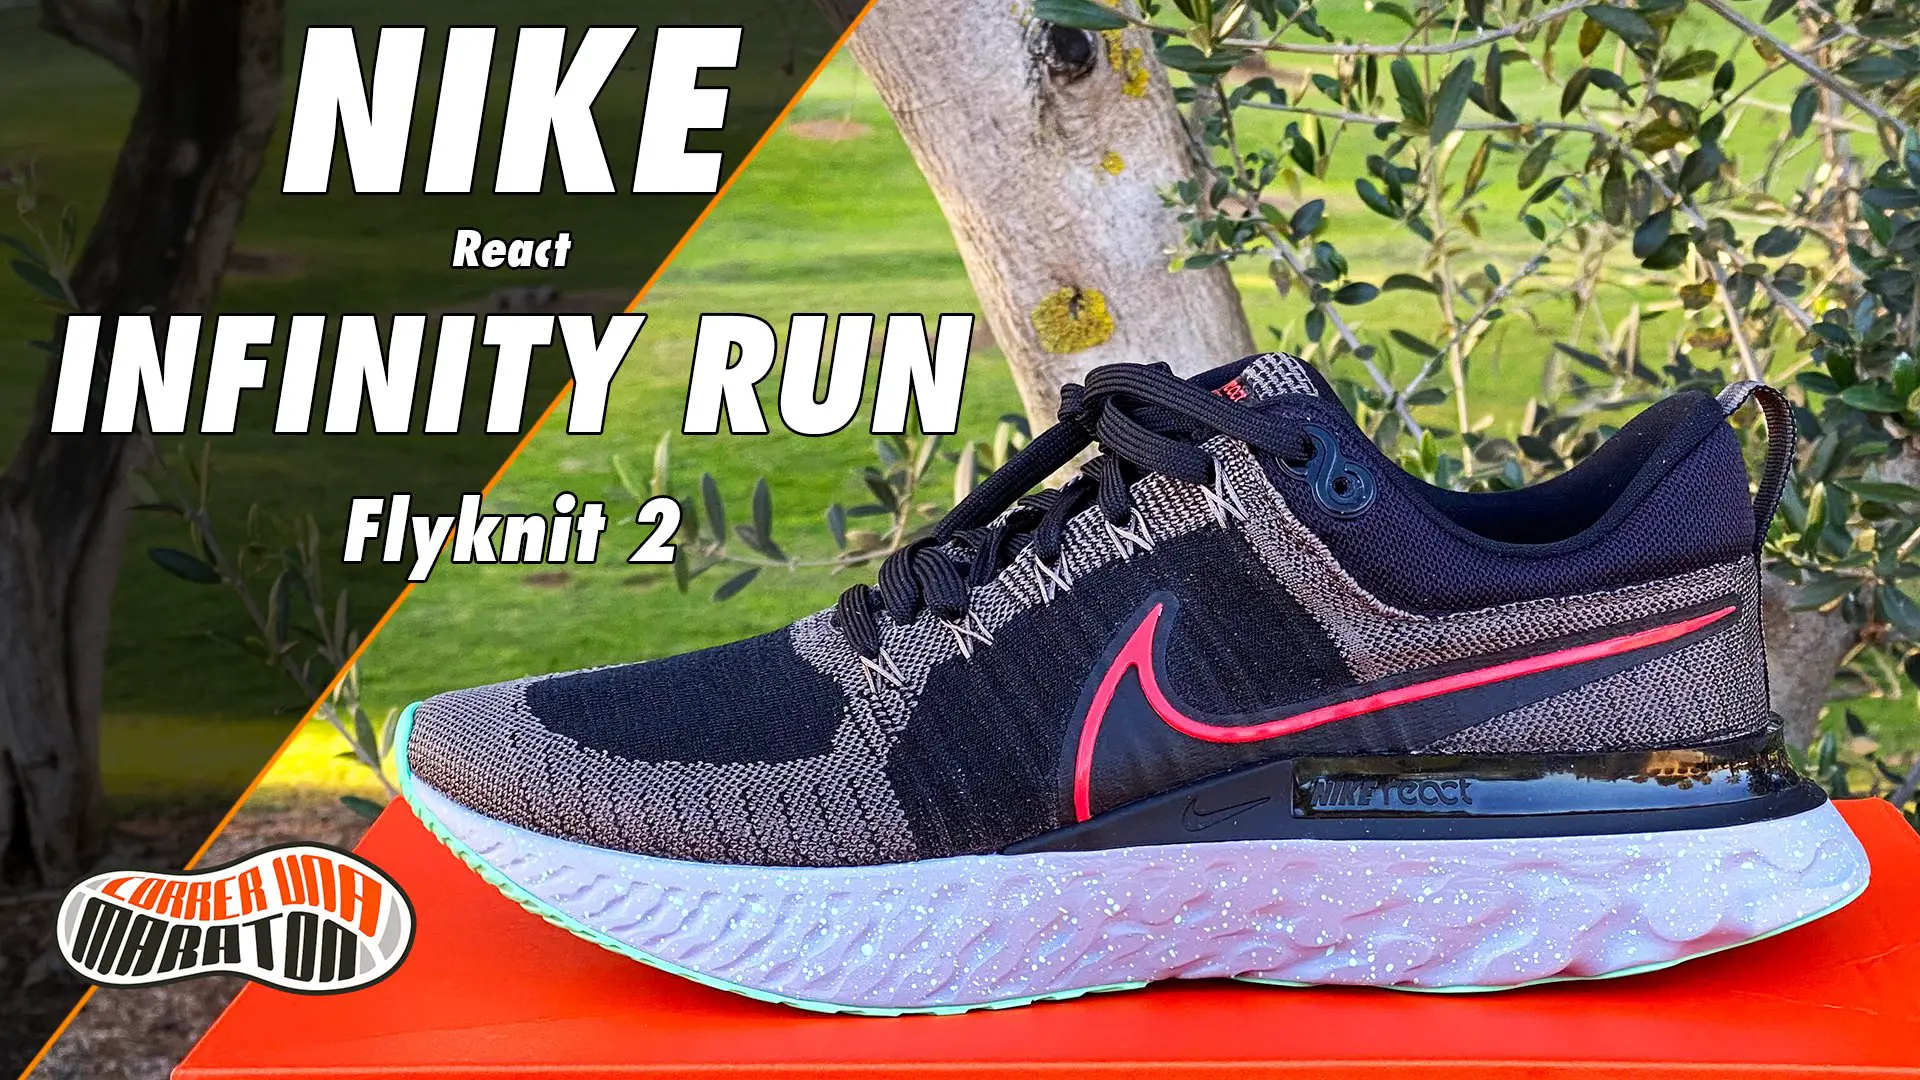 calina Asesinar Ananiver Nike Infinity Run Flyknit 2 | Análisis y diferencias con el modelo original  - Correr una Maratón - Review de Garmin, Polar, Suunto, COROS...